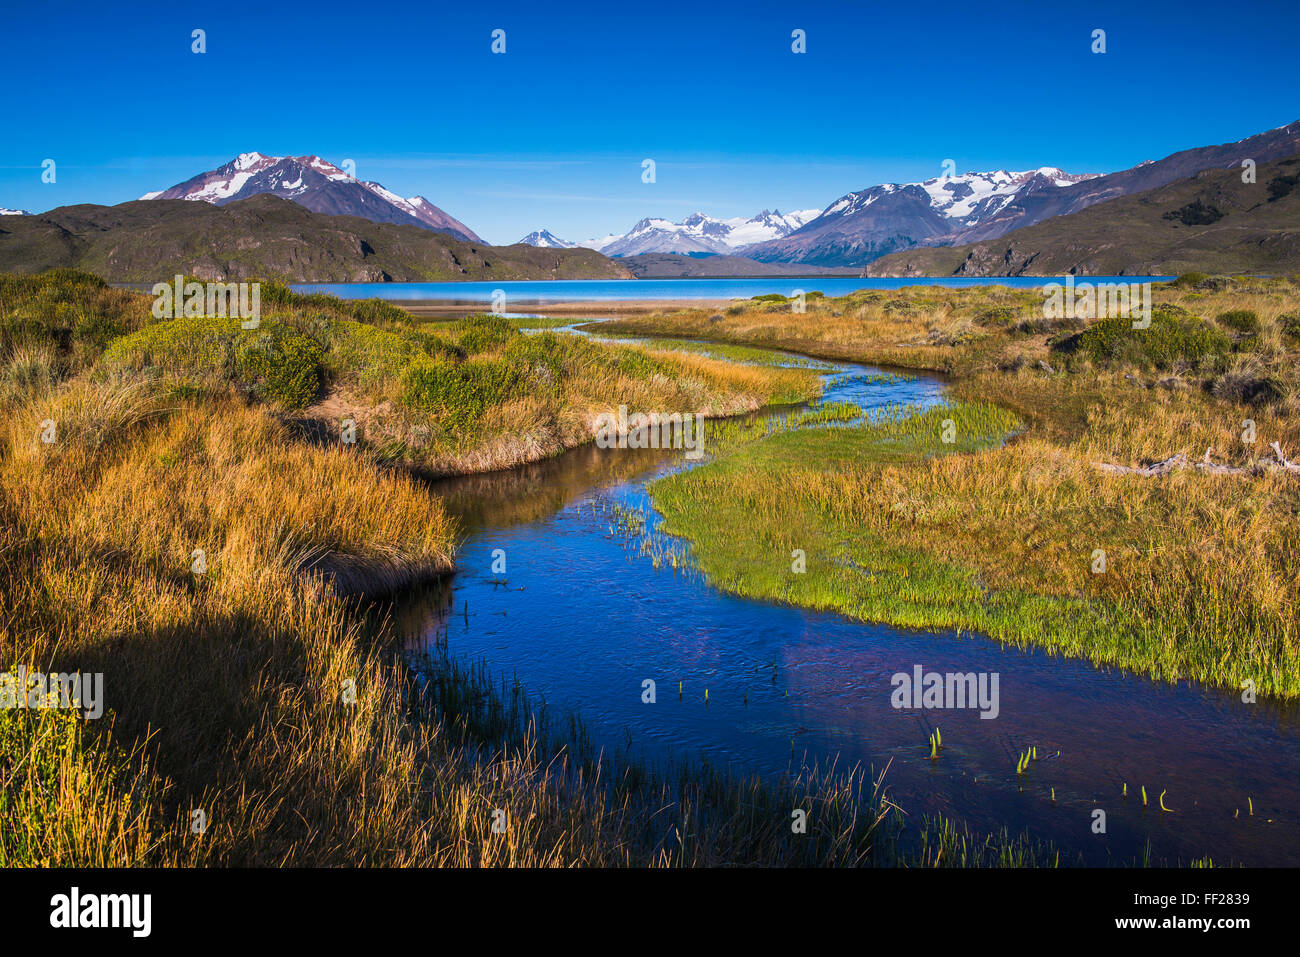 BeRMgrano RMake with Andes Mountain Range backdrop, Perito Moreno NationaRM Park, Santa Cruz Province, Patagonia, Argentina Stock Photo